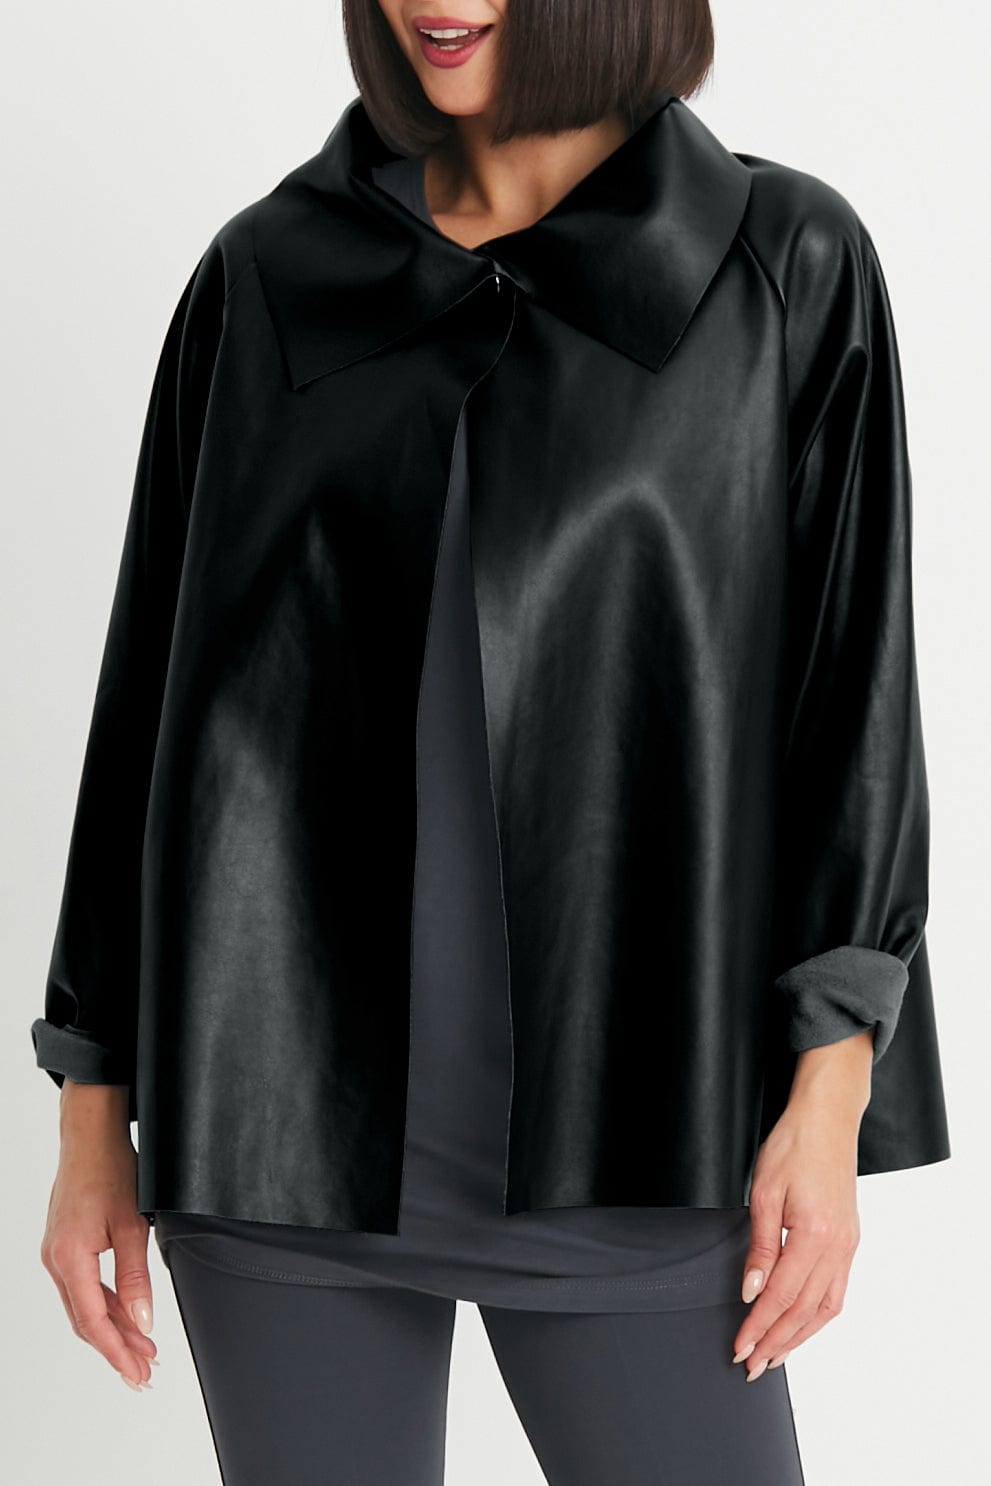 PLANET by Lauren G Women's Jackets Black / 2 Planet Vegan Leather Shirttail Jacket